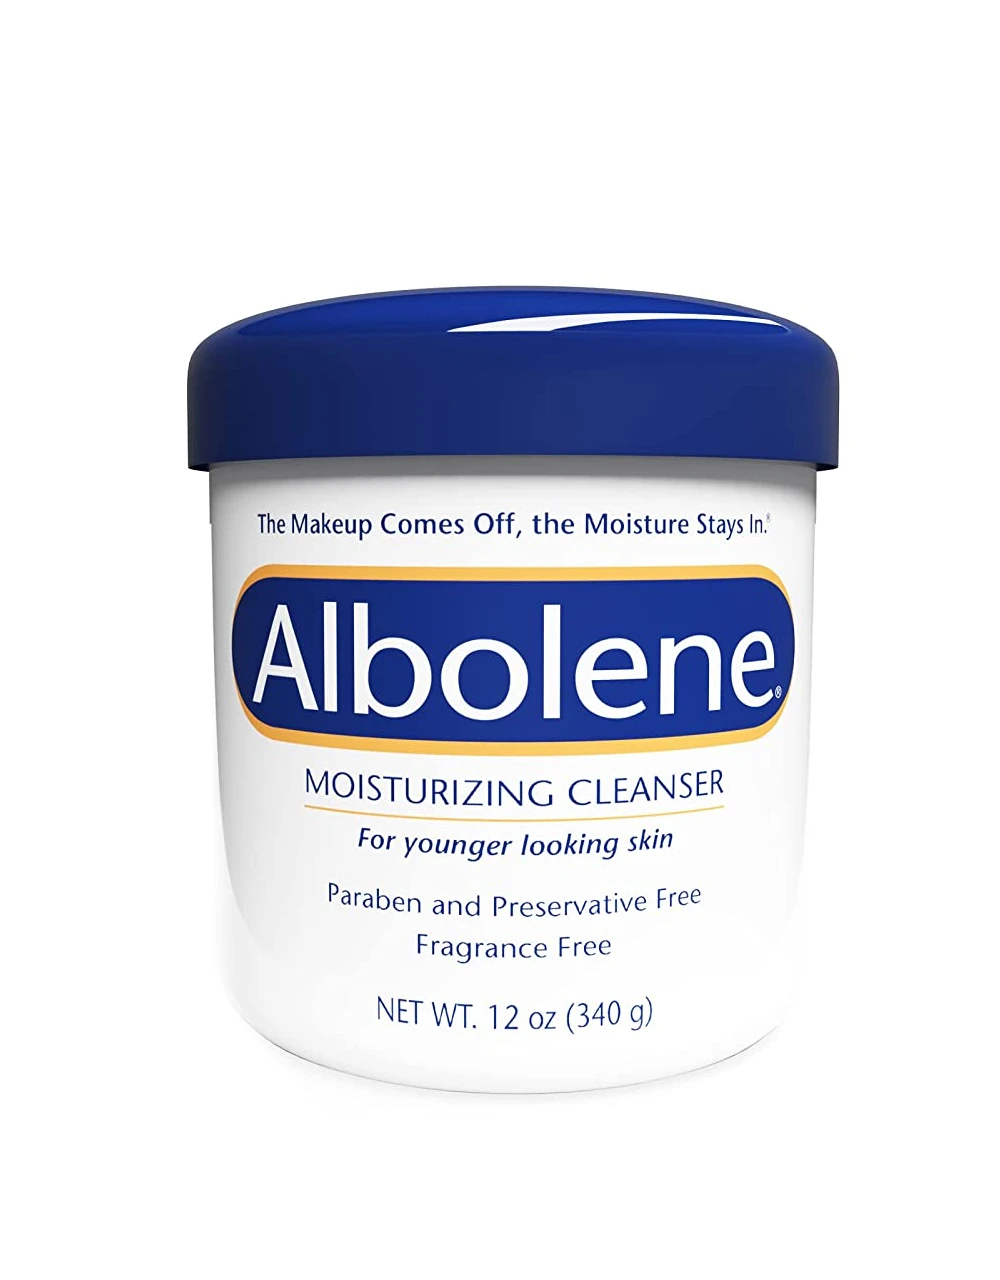 Albolene Face Moisturizer and Makeup Remover